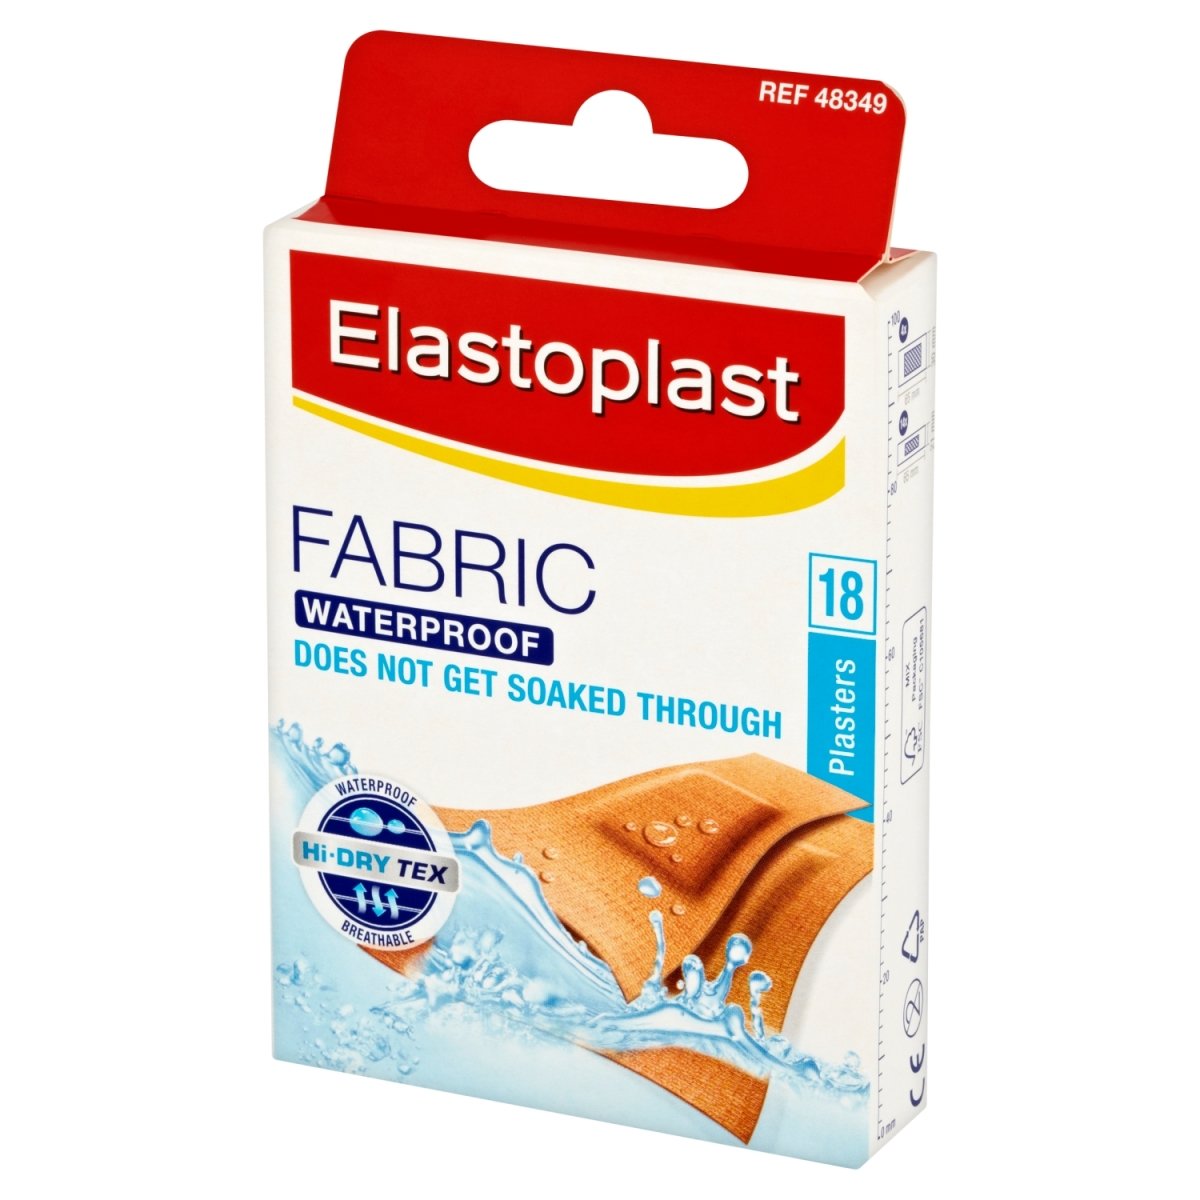 Elastoplast Fabric Waterproof Plasters - Intamarque 4005800044427